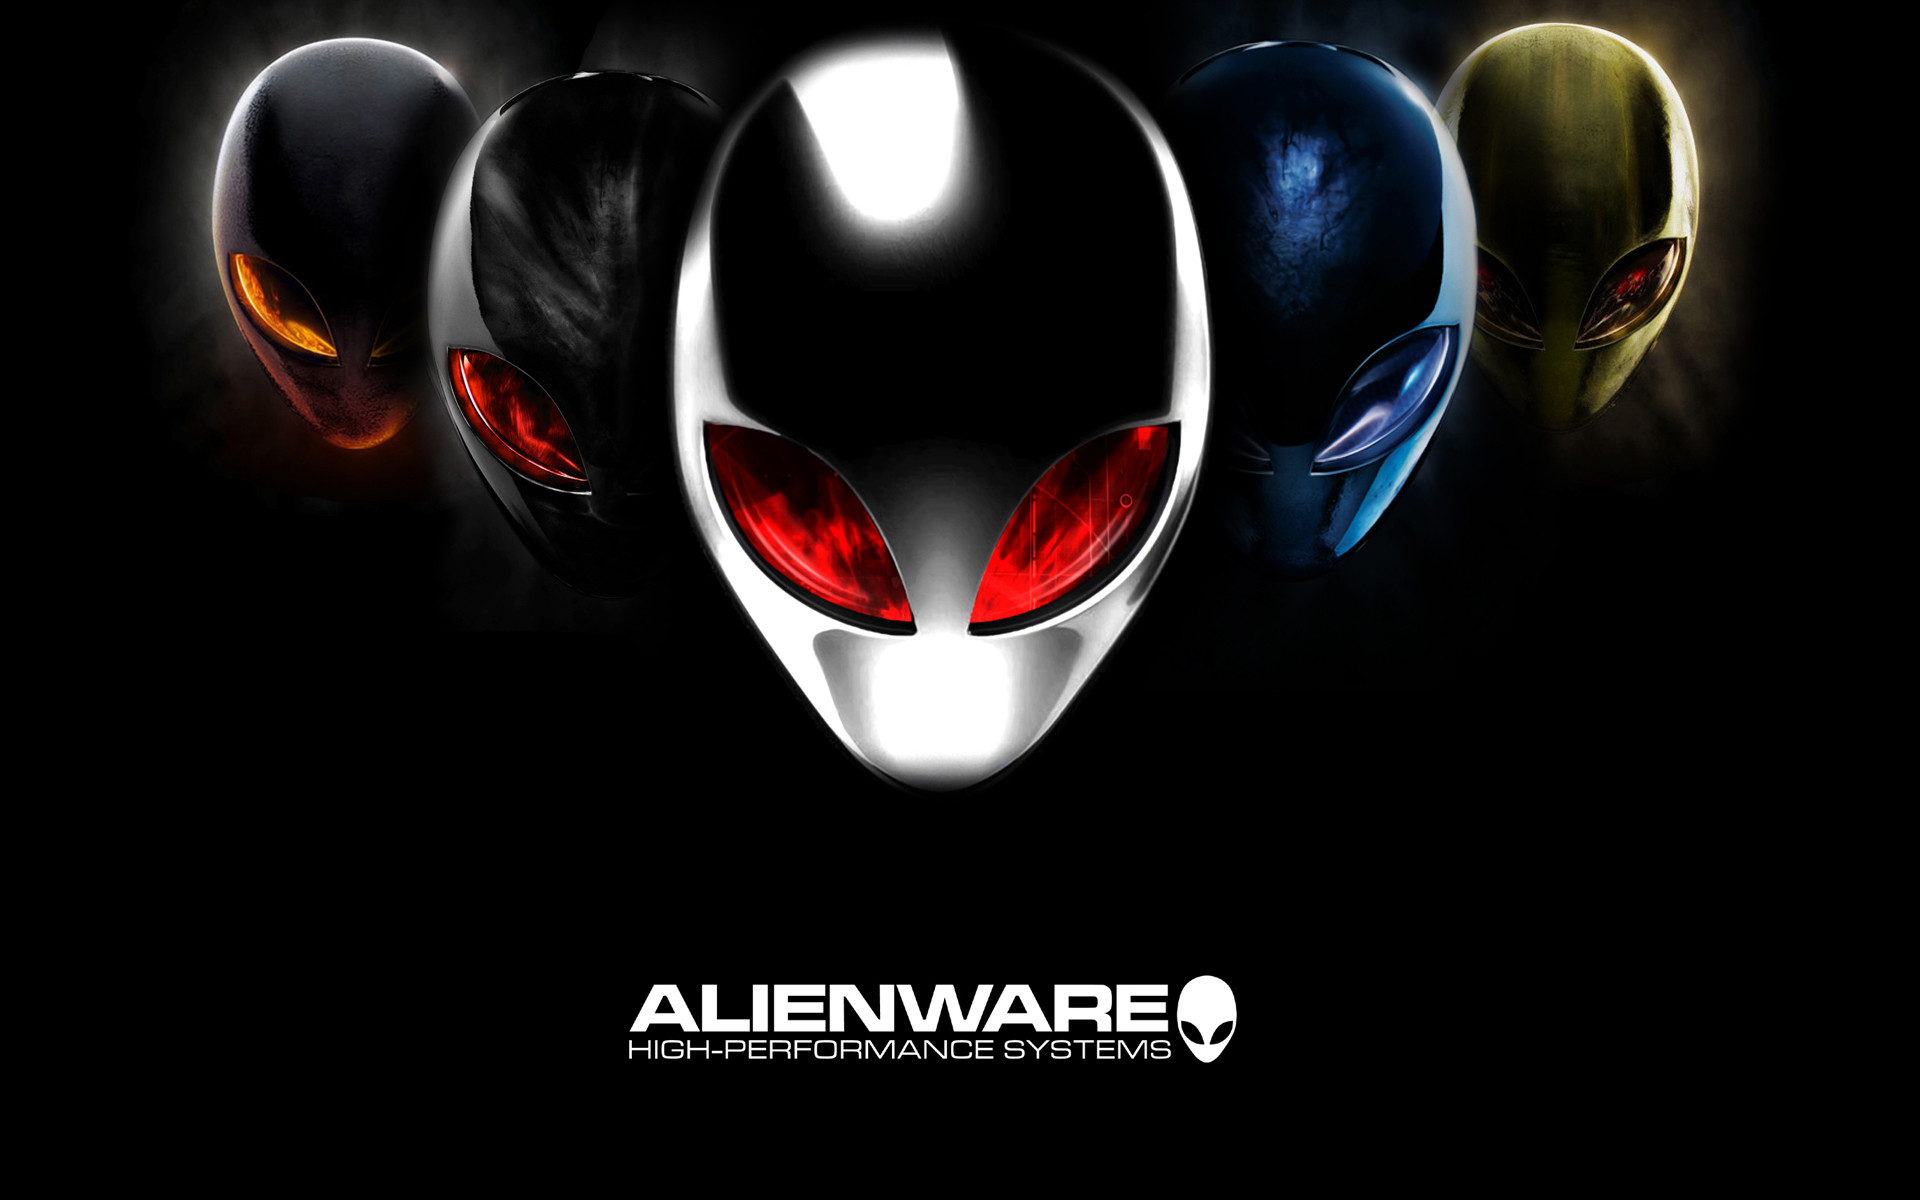 1920x1200 Alienware Images. Alienware Images On Wallpaper Hd ...